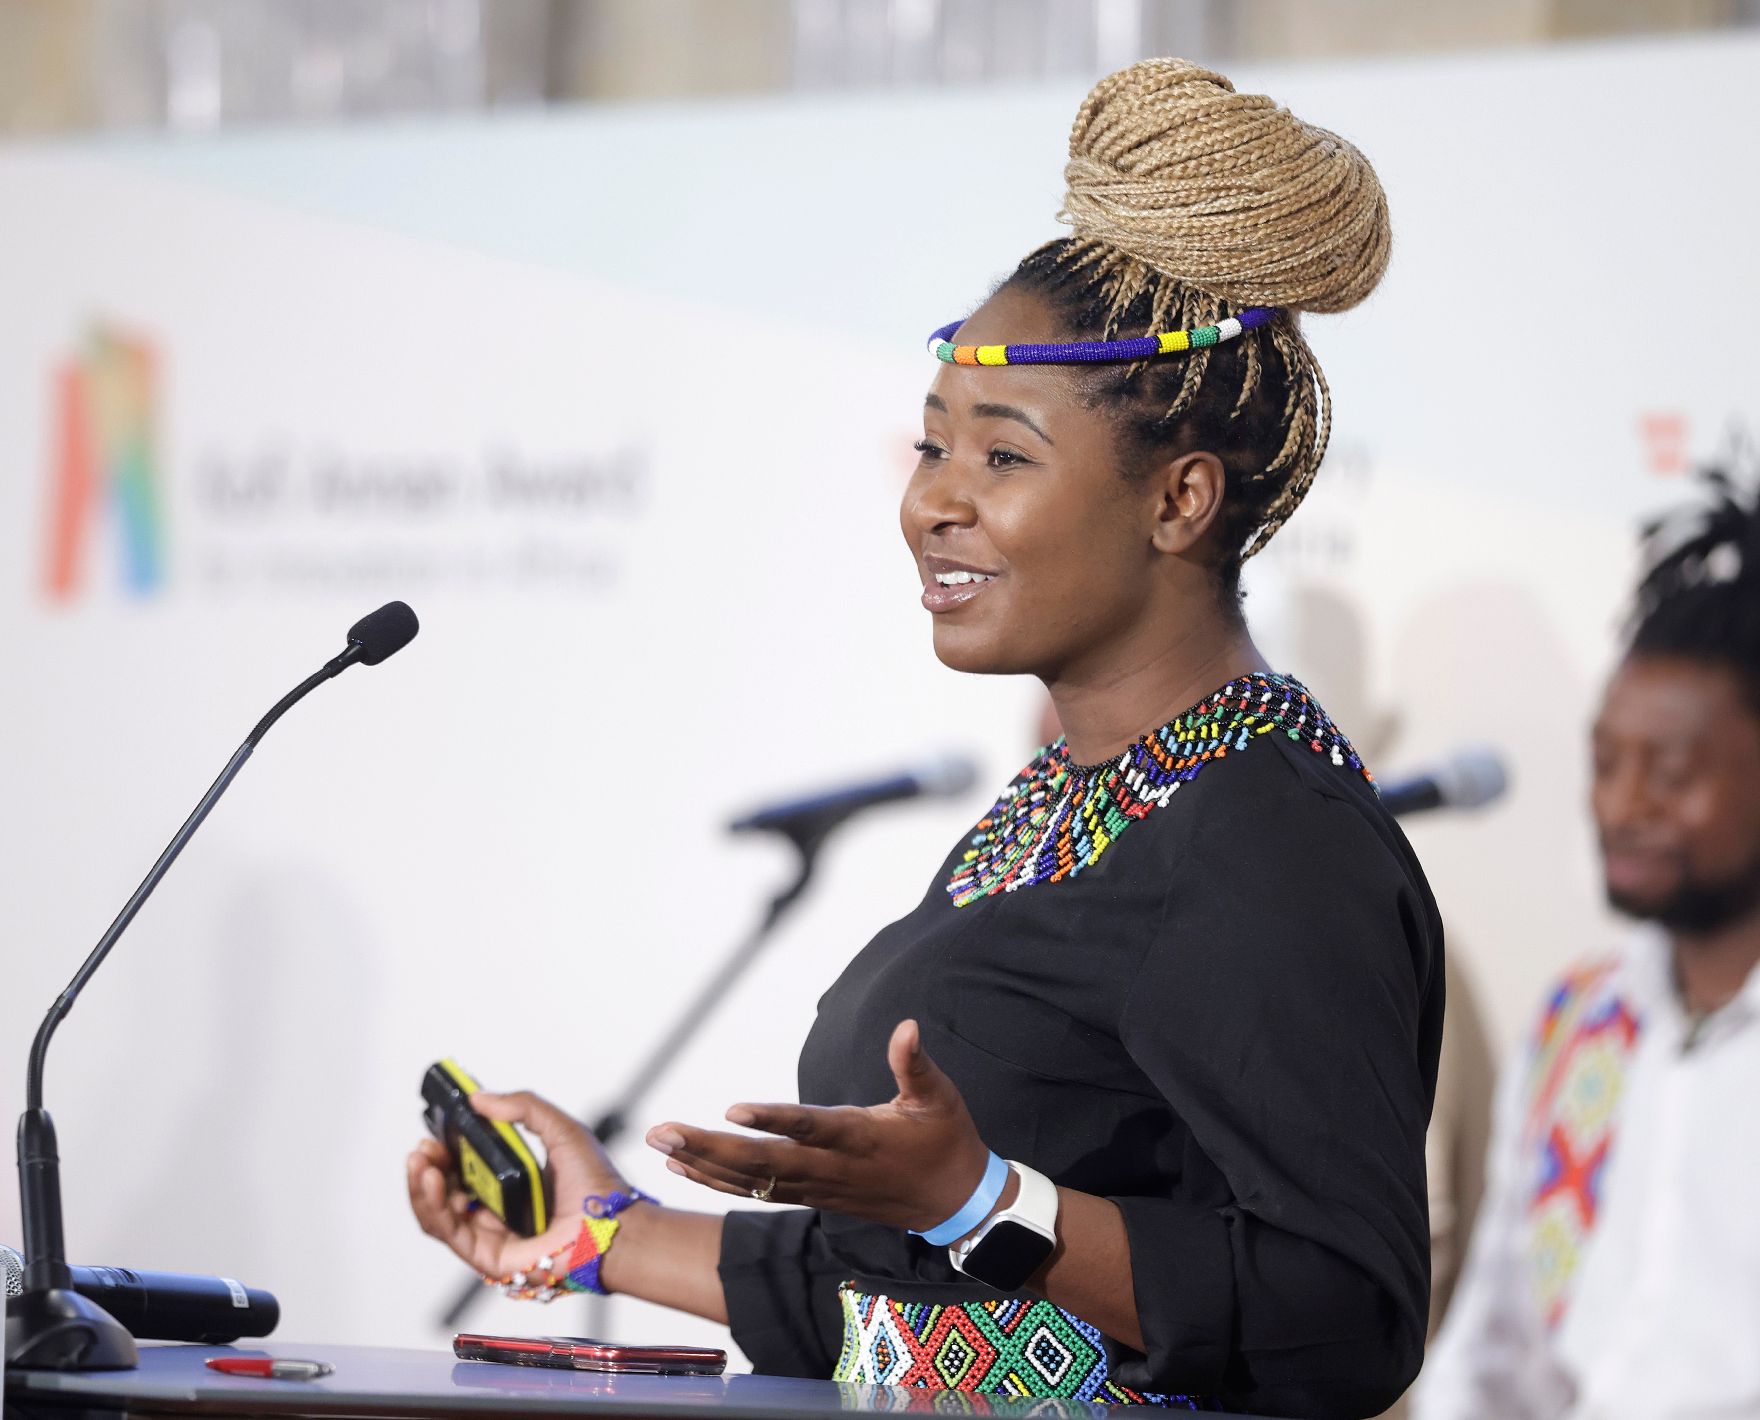 Am 11. Juli 2022 nahm Bundesministerin Karoline Edtstadler gemeinsam mit Bundesminister Alexander Schallenberg an der Verleihung des „Kofi Annan Award for Innovation in Africa“ teil.